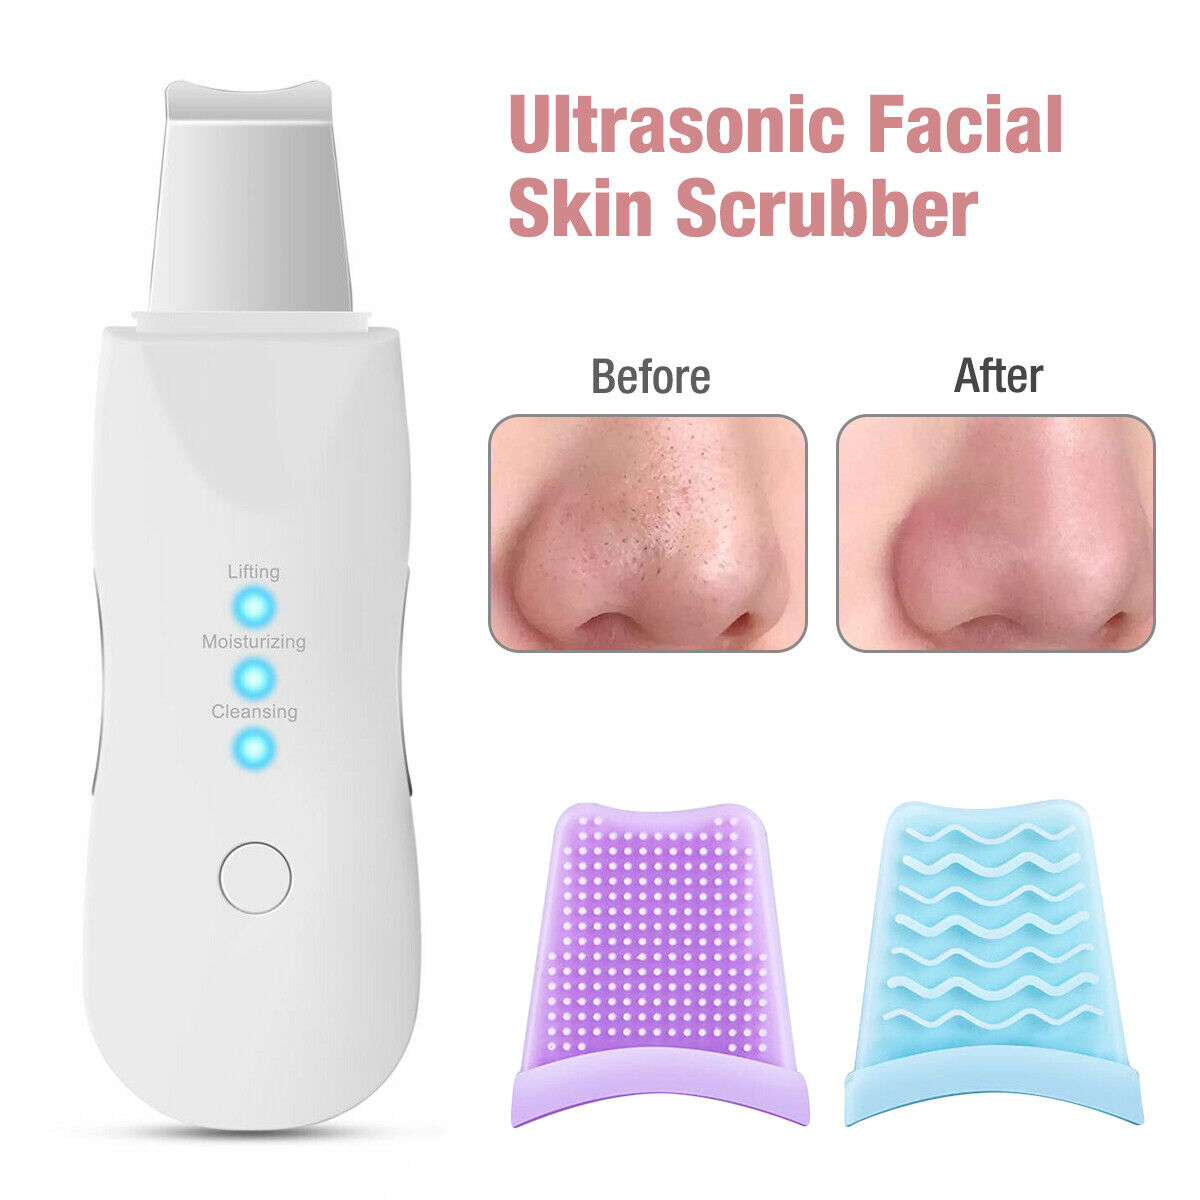 Revolutionize Your Skincare Routine with the Ultrasonic Skin Scrubber